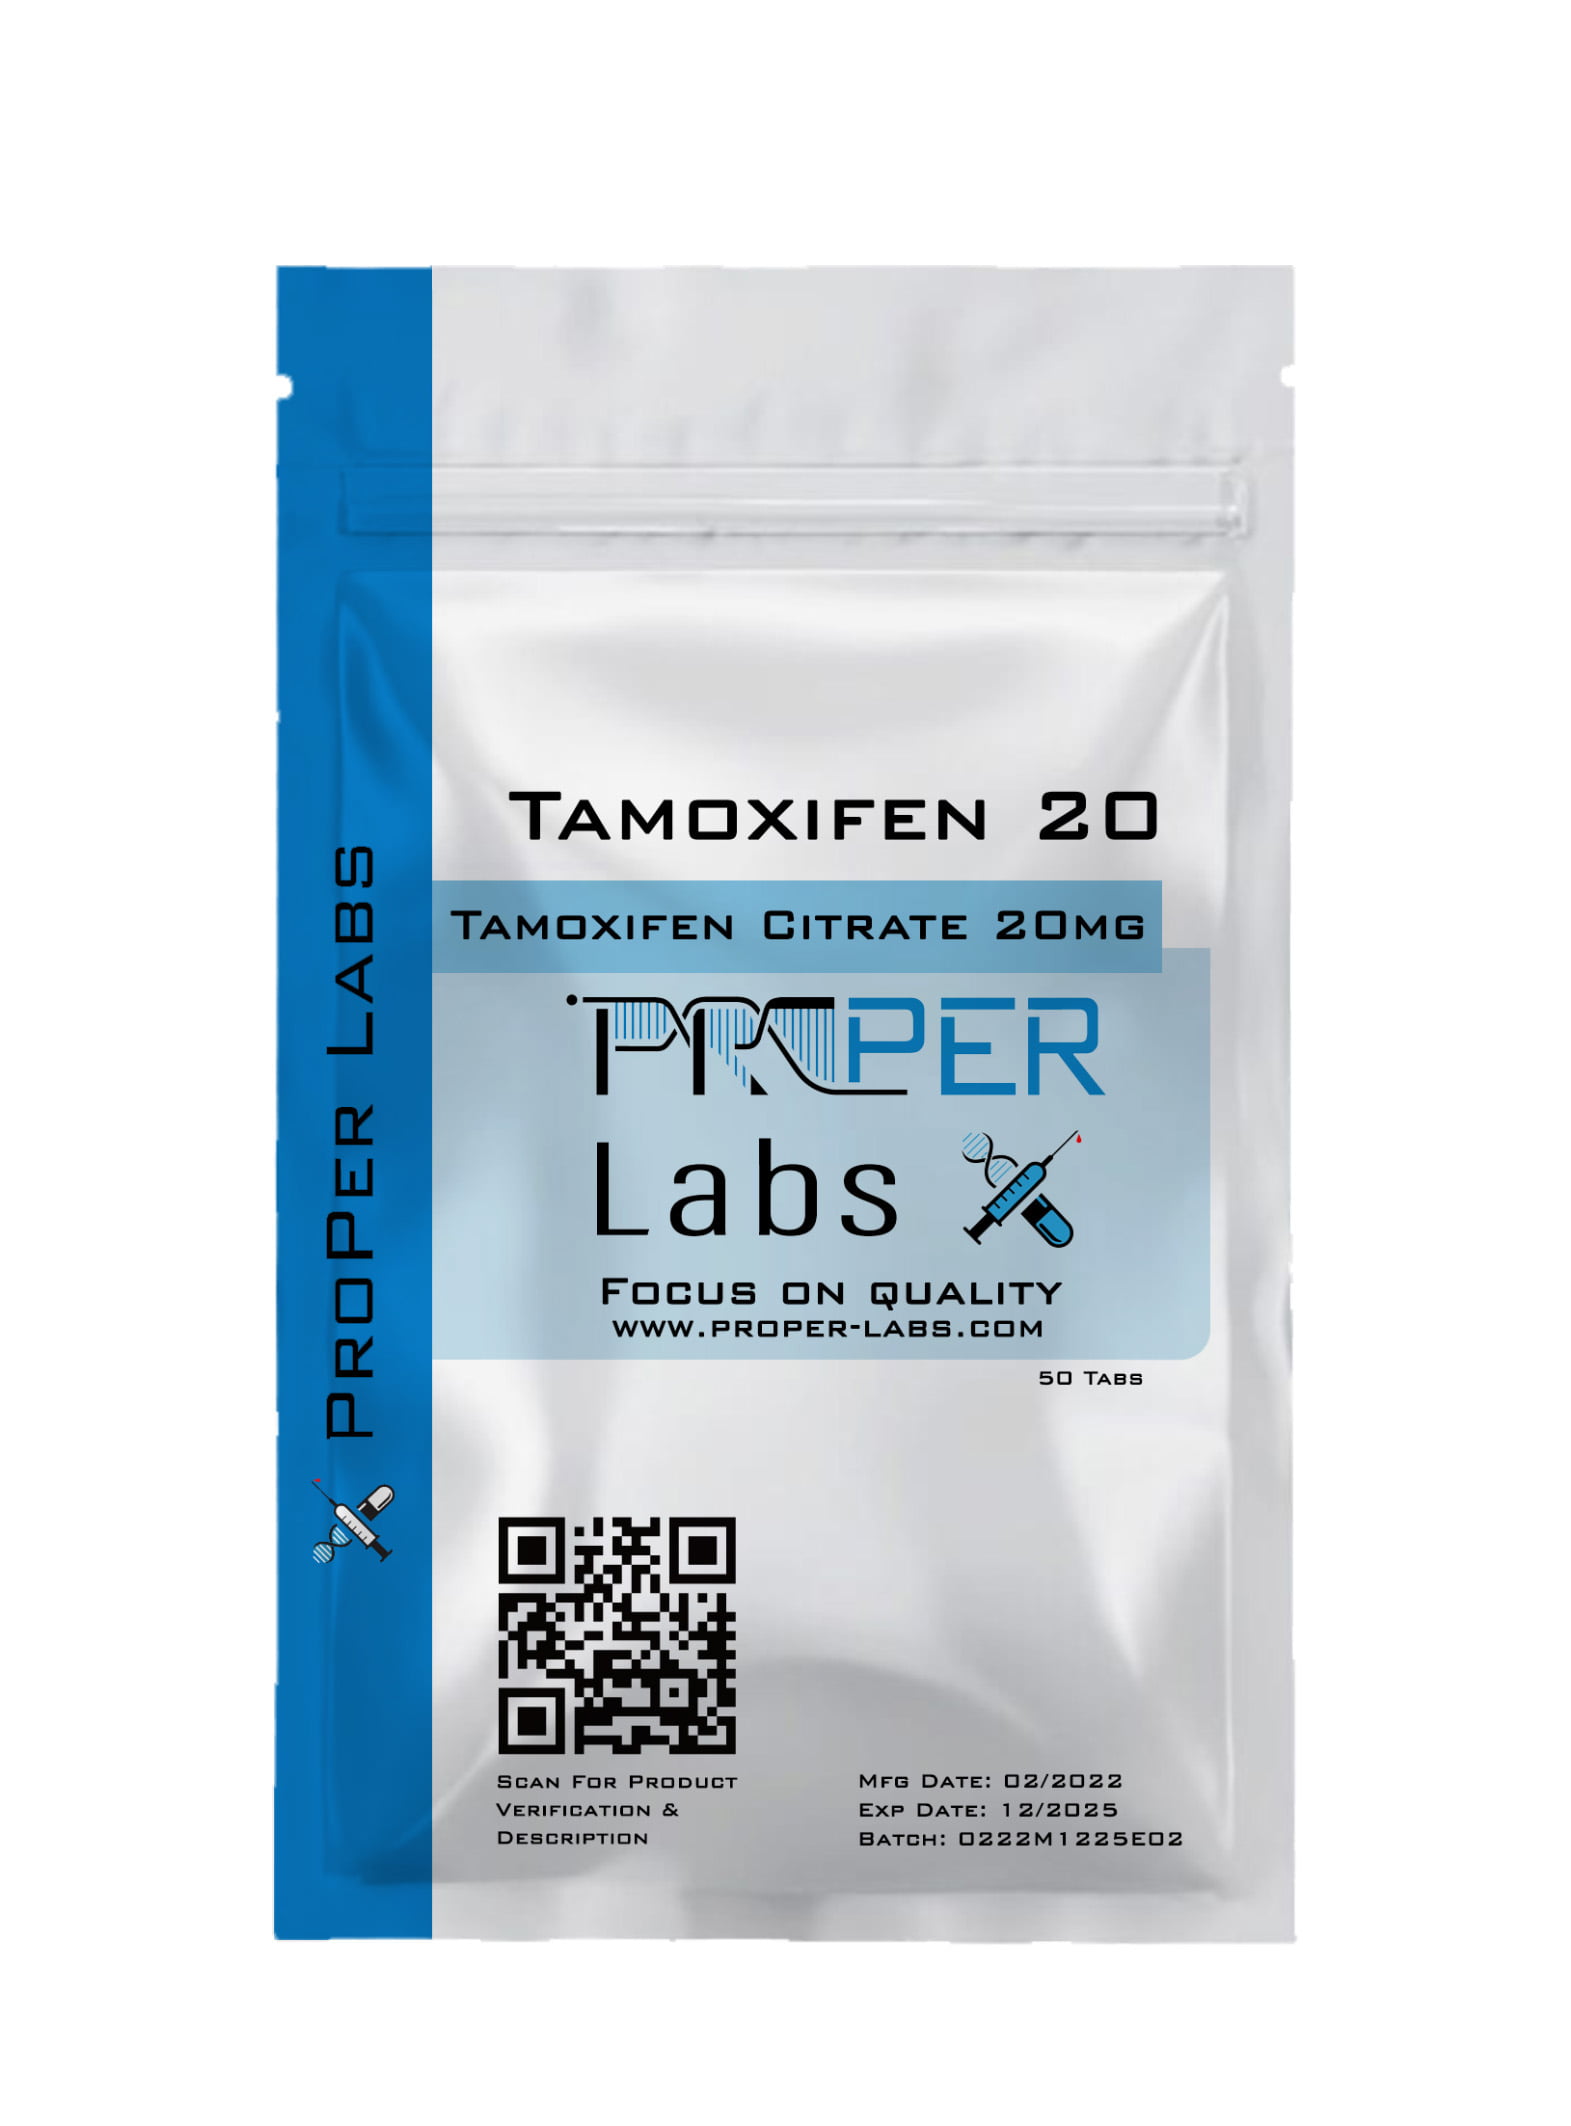 Tamoxifen 20 FRONT